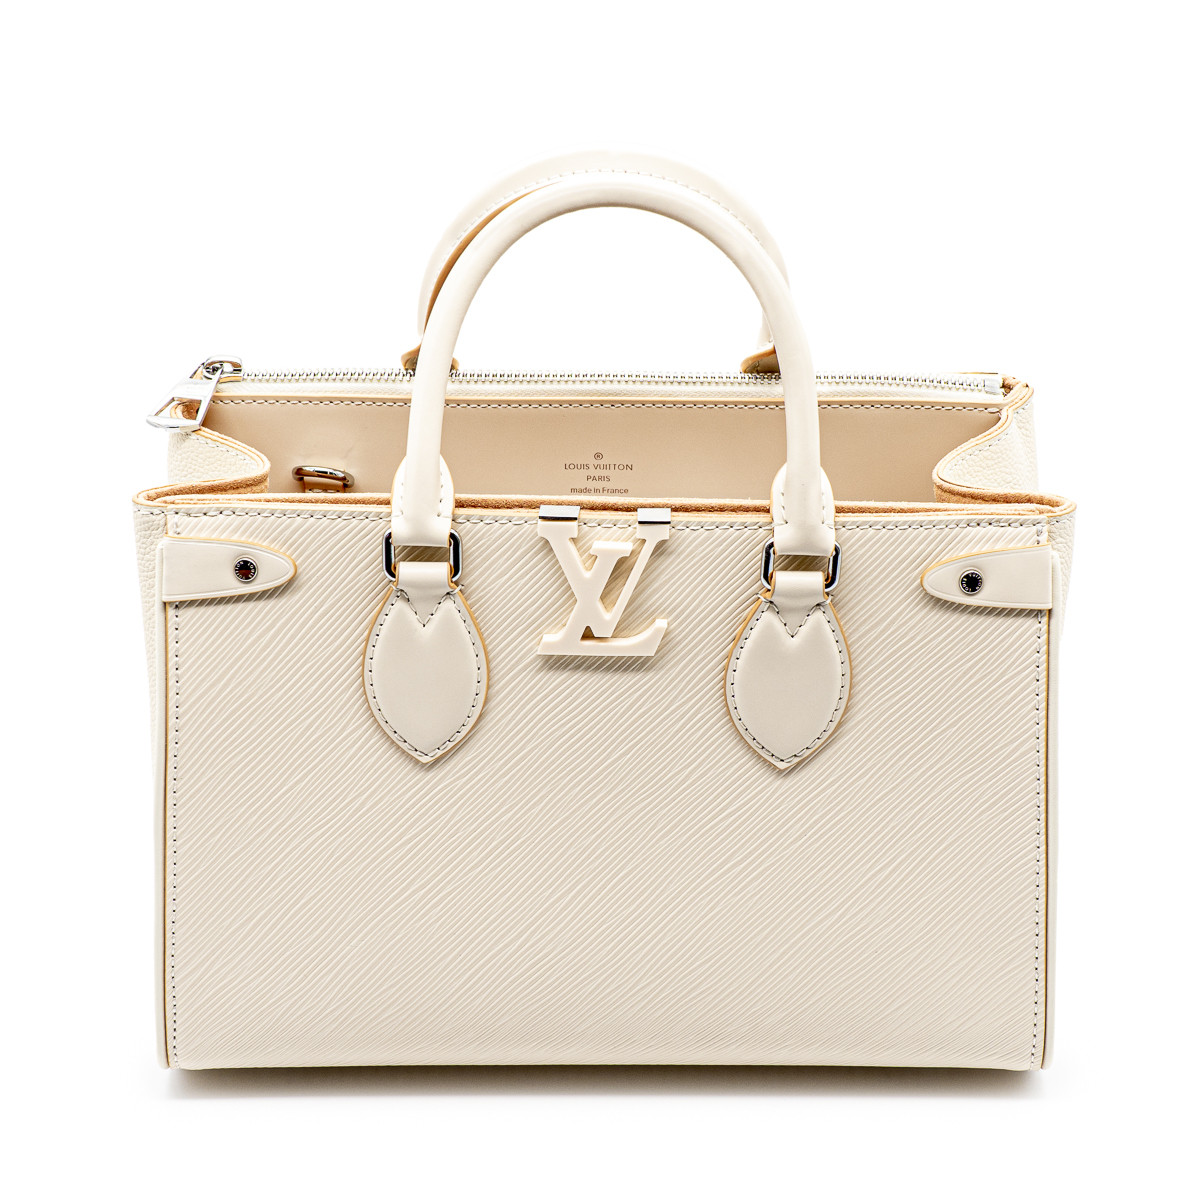 Sac Grenelle tote bag P.M.Louis Vuitton d'occasion.